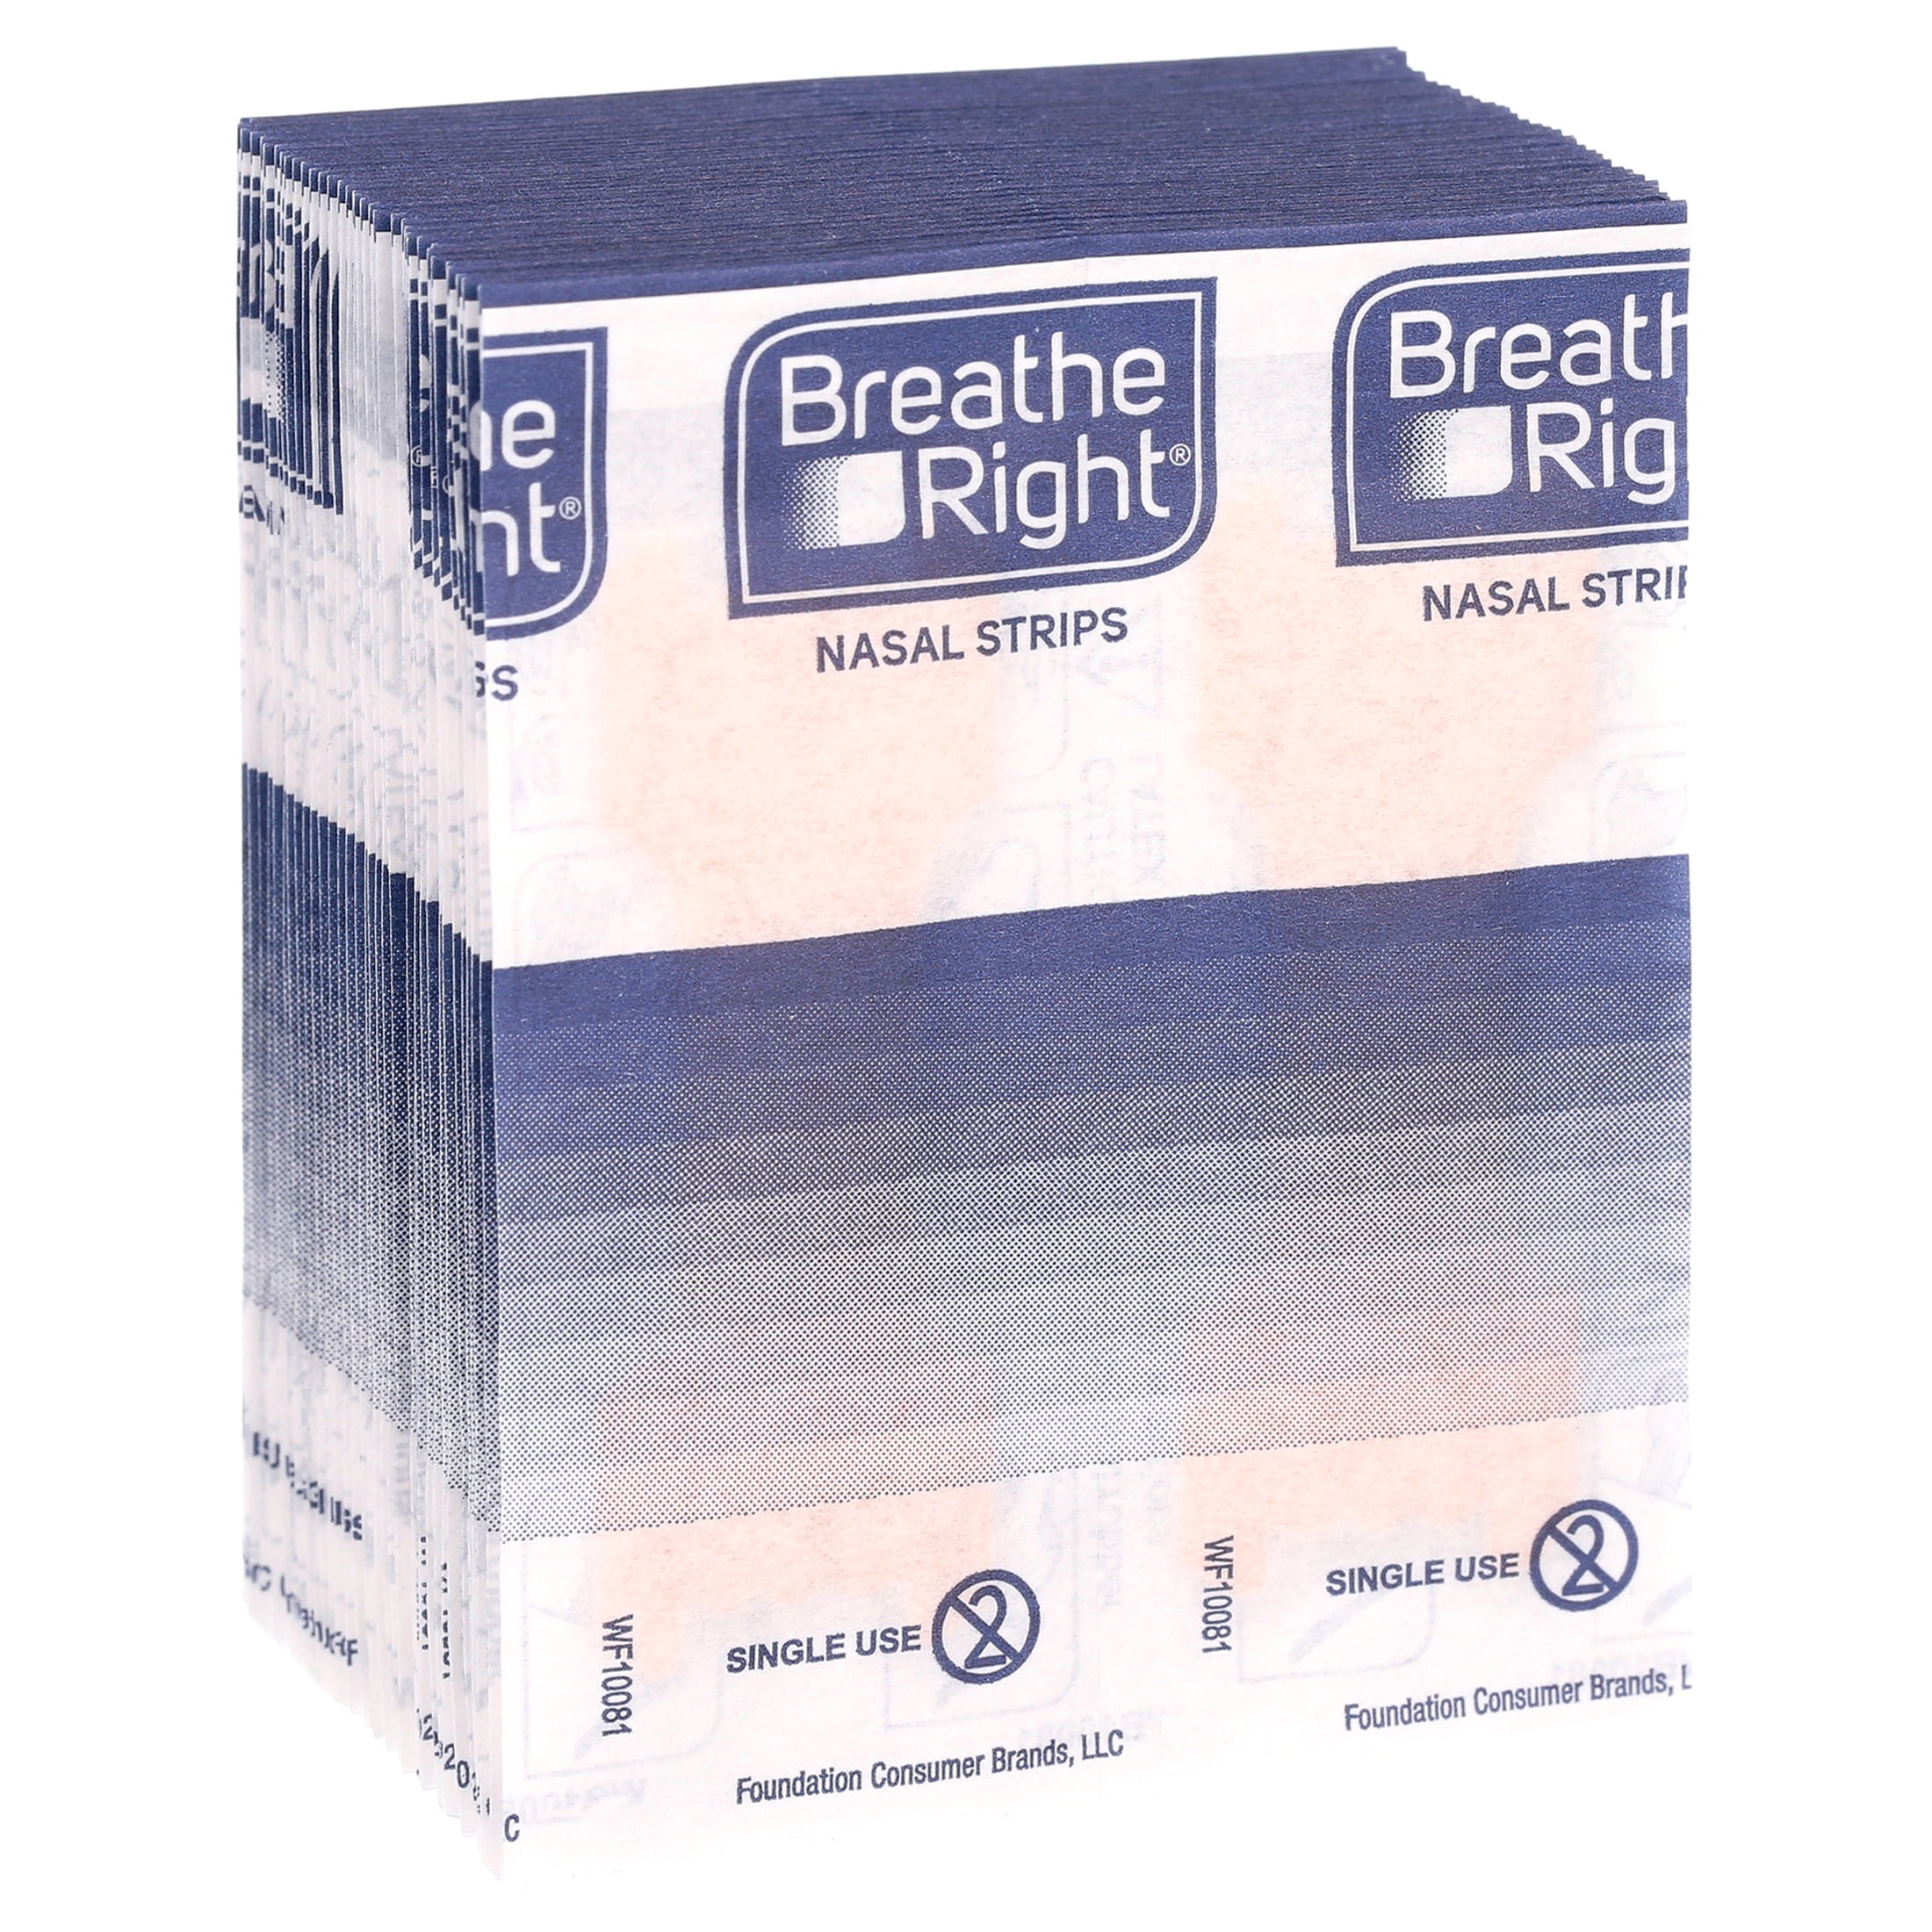 72 Tiras Nasales Extra Fuertes Breathe Right Reduce Ronquido